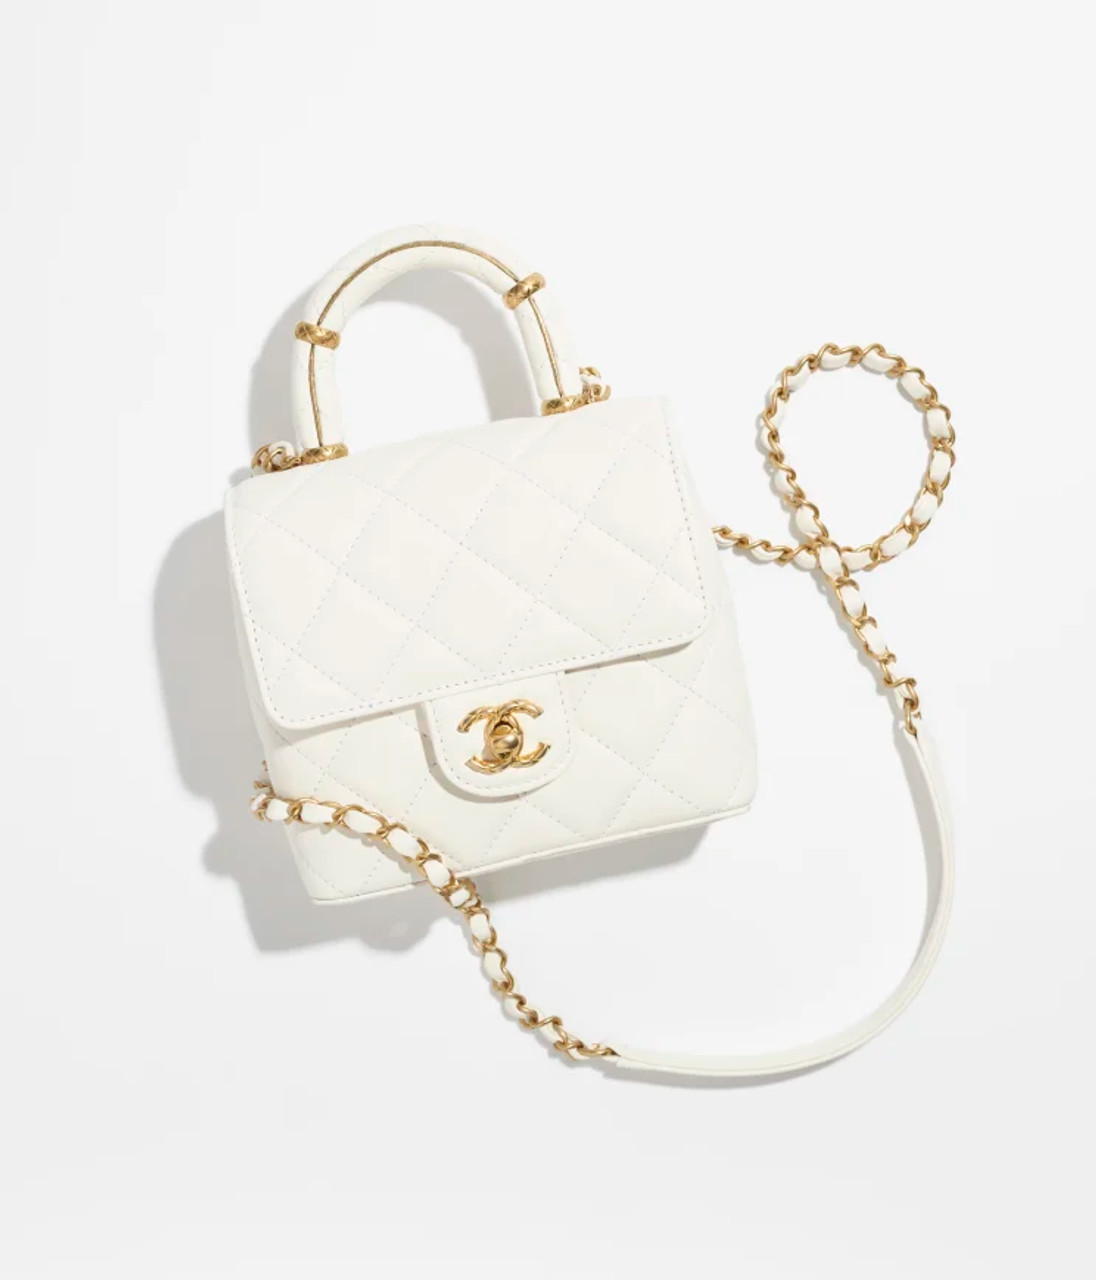 Chanel White Small Chic Pearls Flap Bag Chanel | TLC